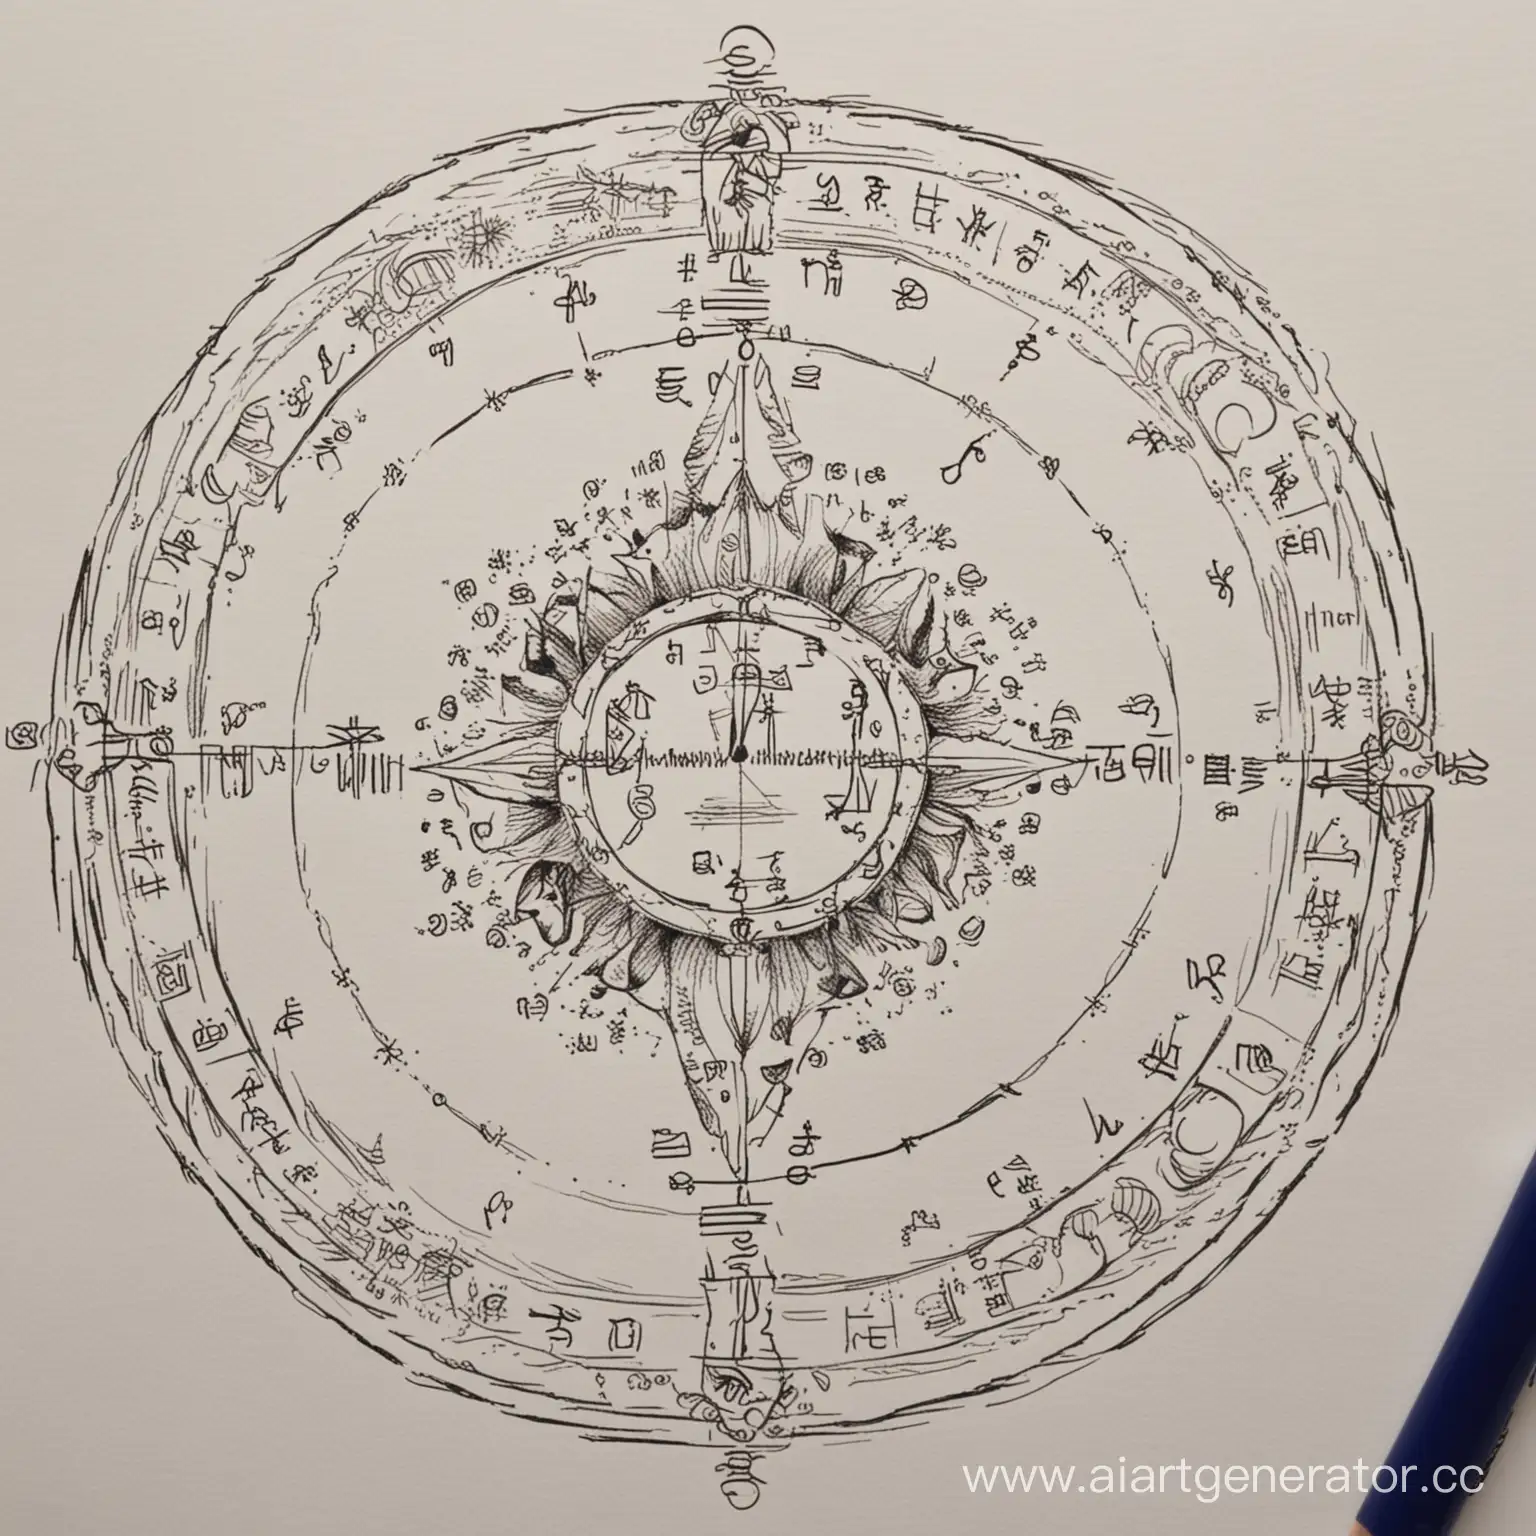 Zodiac-Signs-Illustrated-in-Cosmic-Harmony